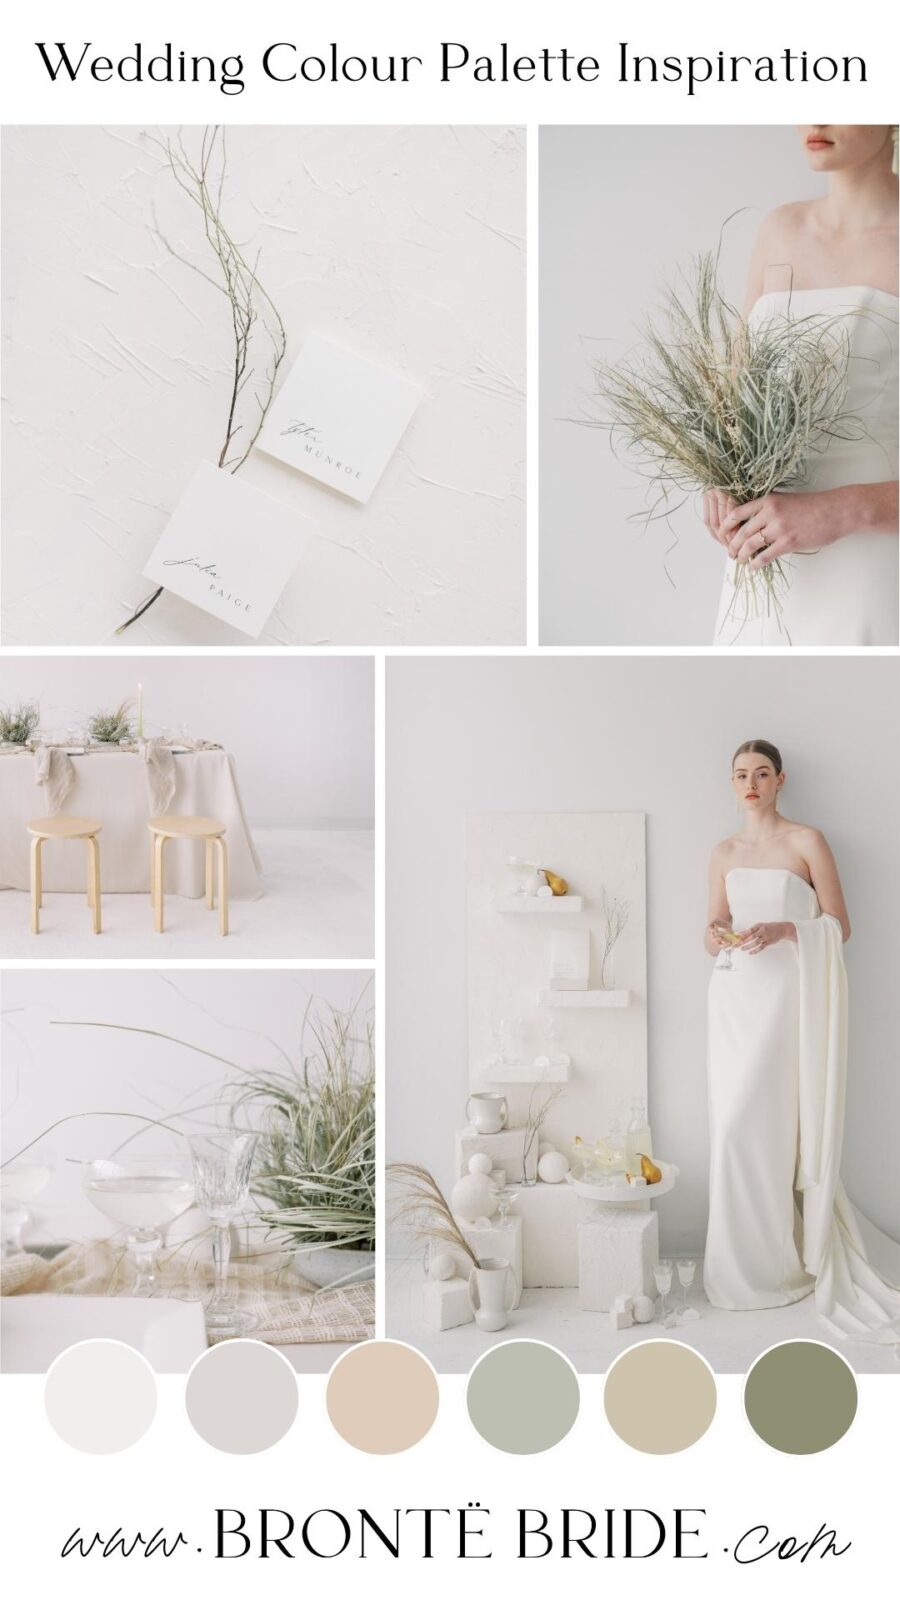 Modern Colour Palette Inspiration - Chic Neutral Wedding Inspiration